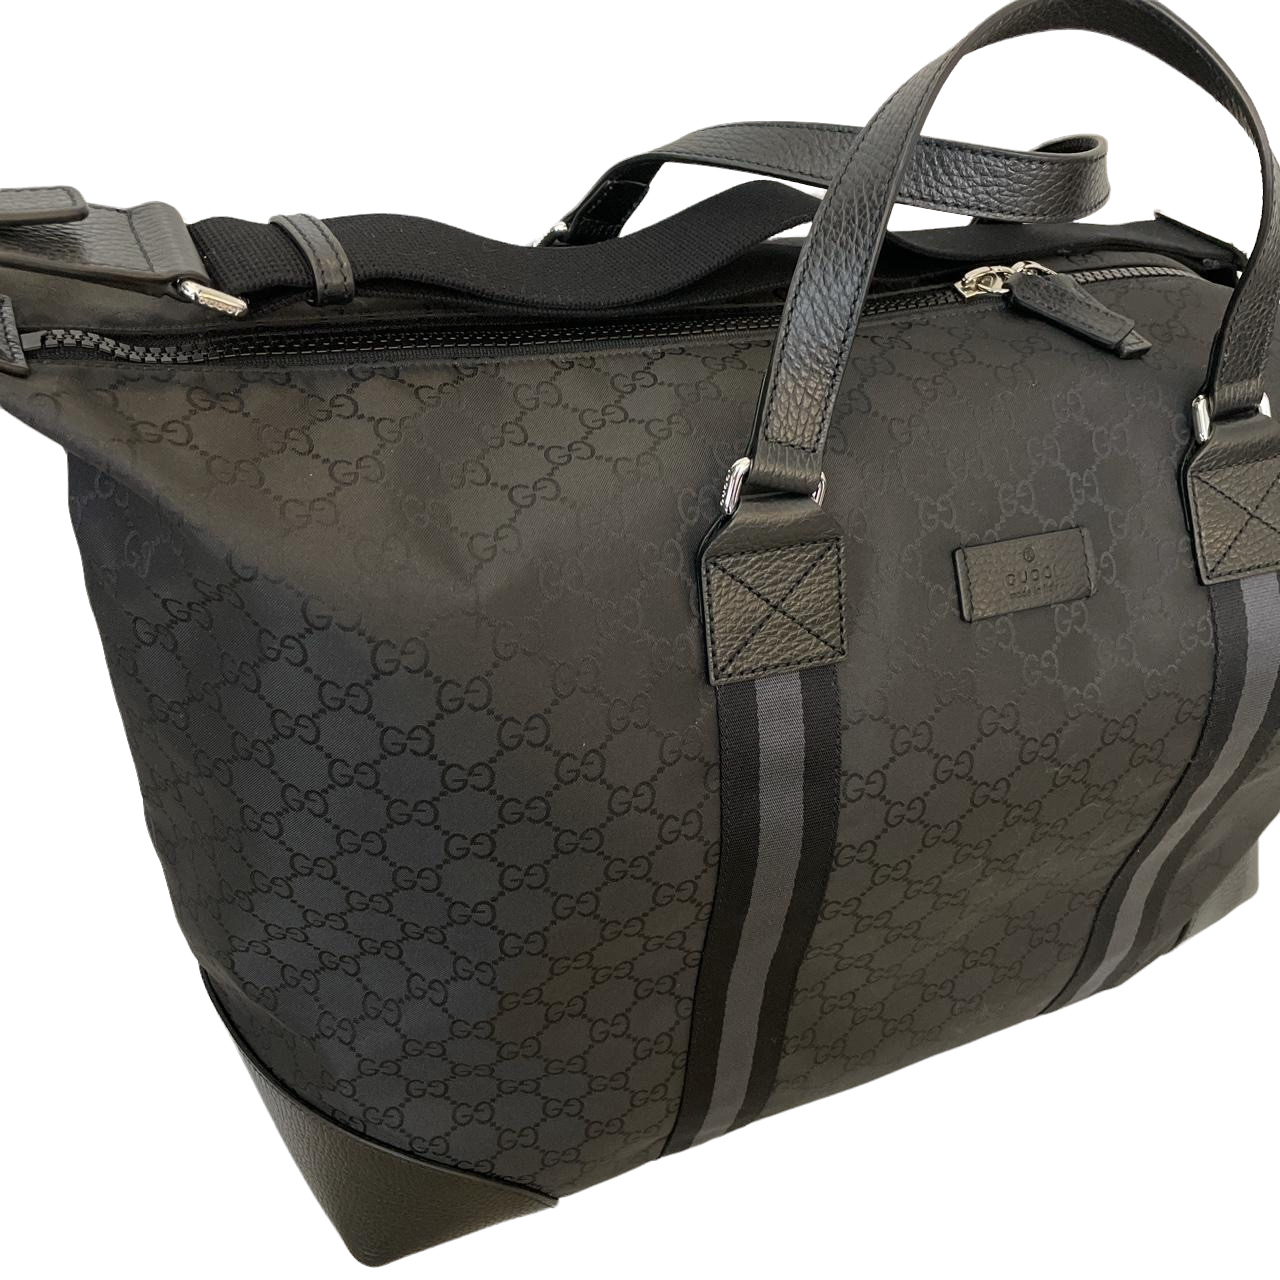 Duffle bag with Interlocking G in black GG Supreme